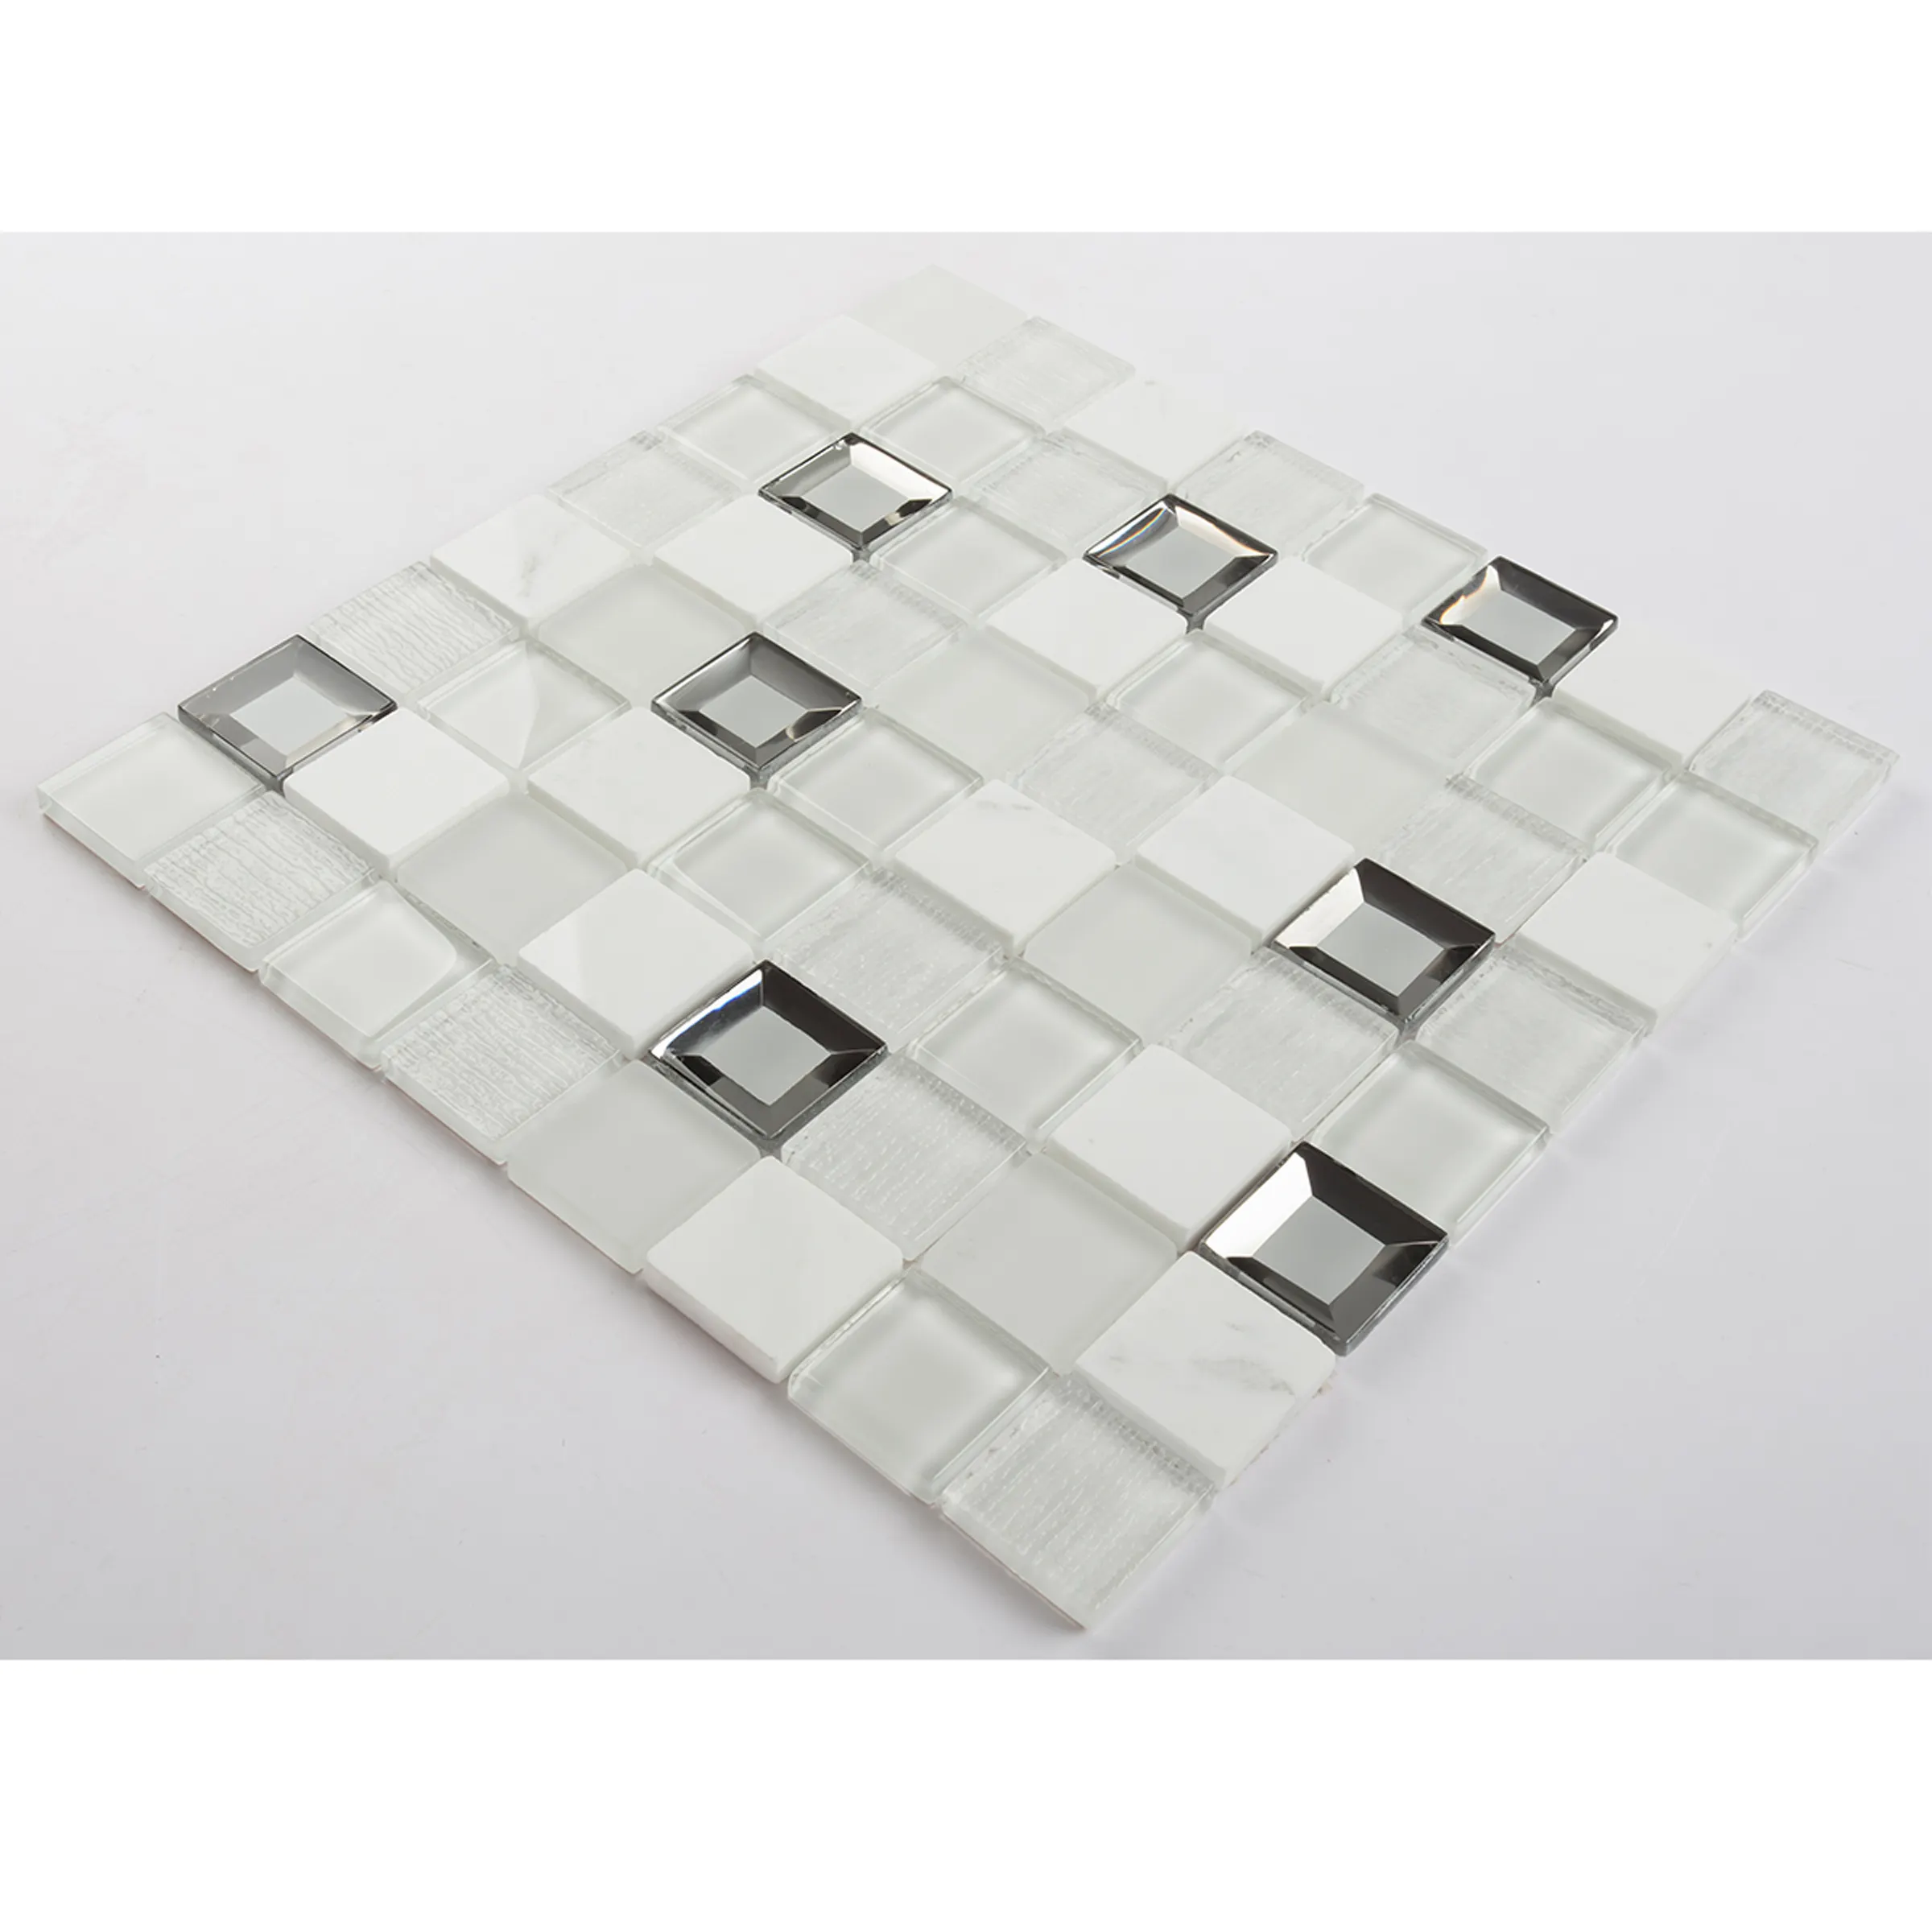 Crystal & Diamond & Stone Mix 36x36x8mm Glass Mosaic Tile Backsplash For Kitchen, Bathroom, Living Room